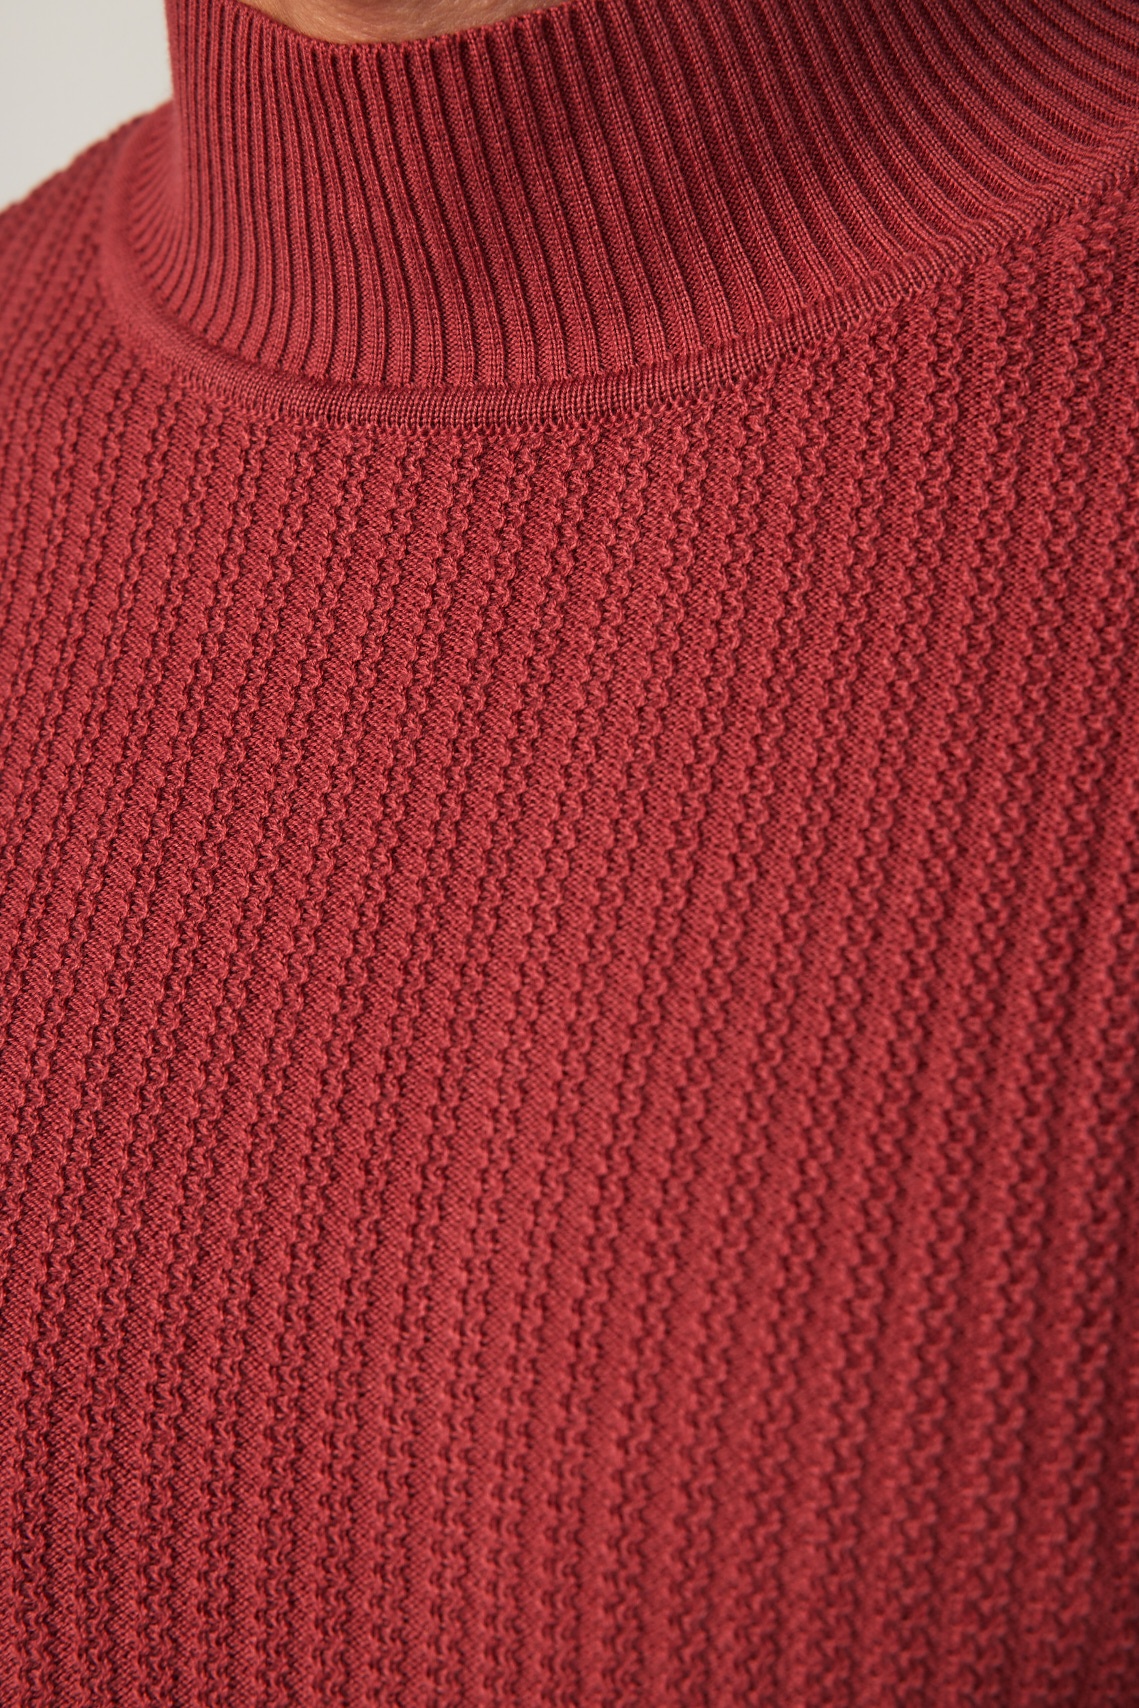  Tile Sweater